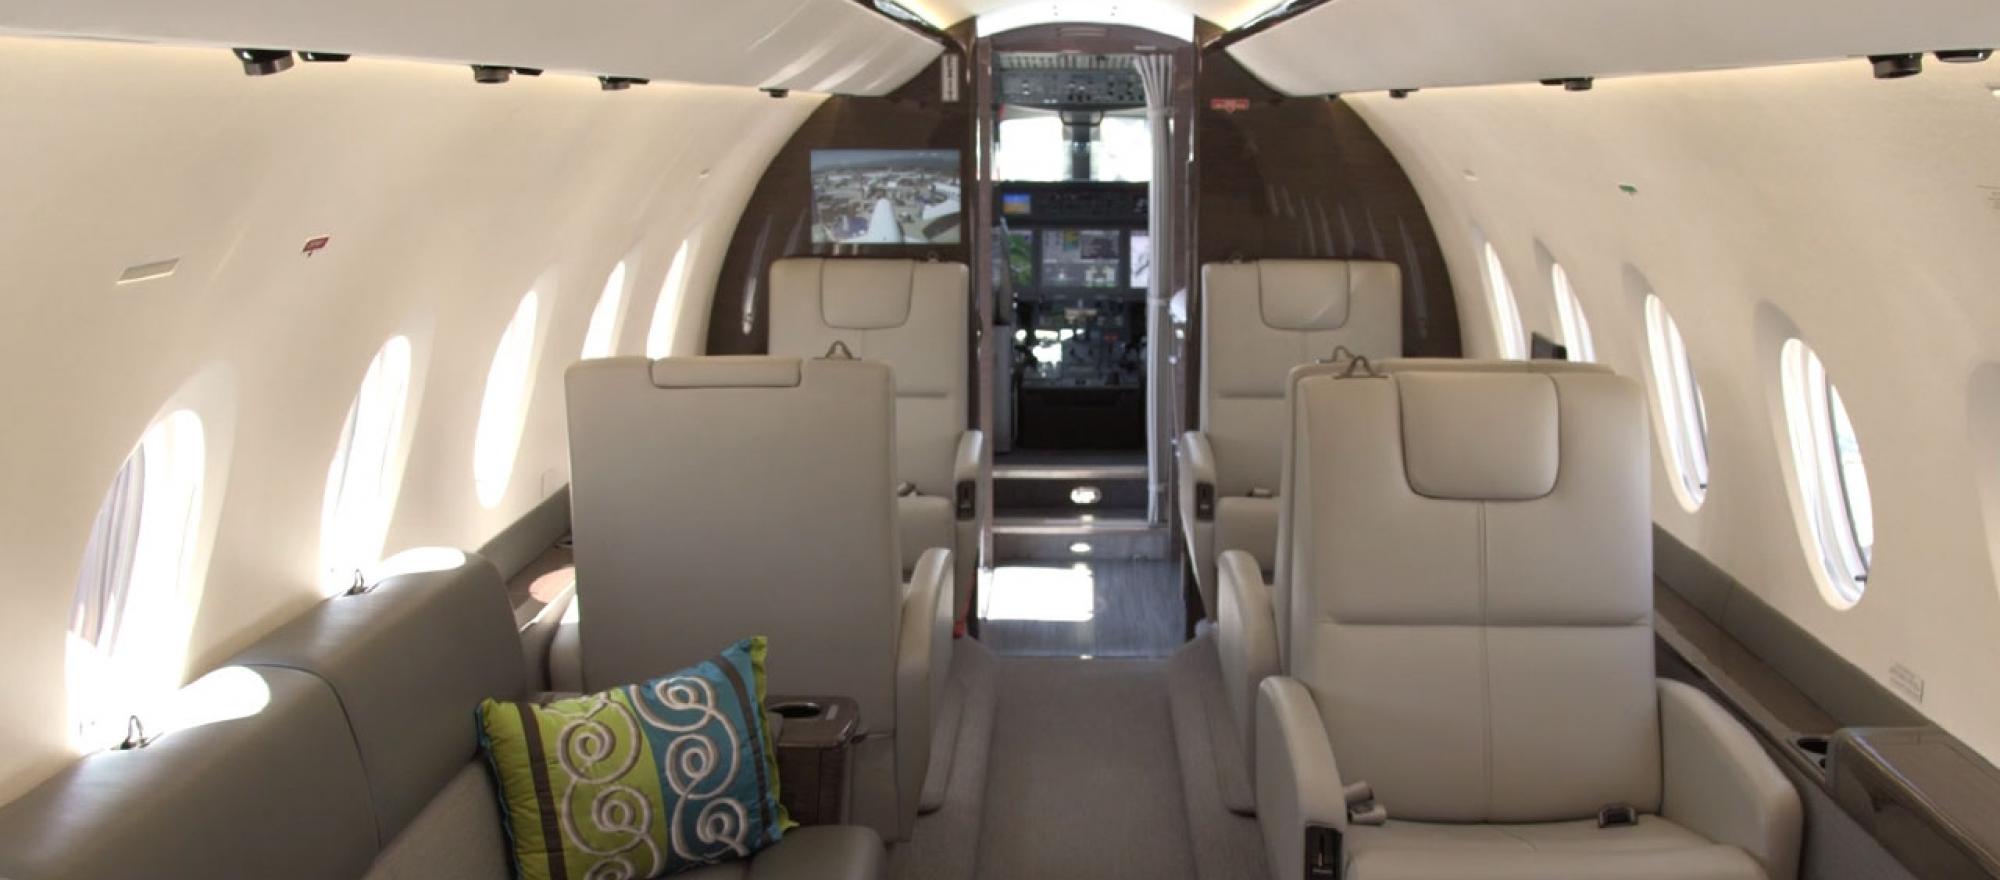 Interior of the Gulfstream G280